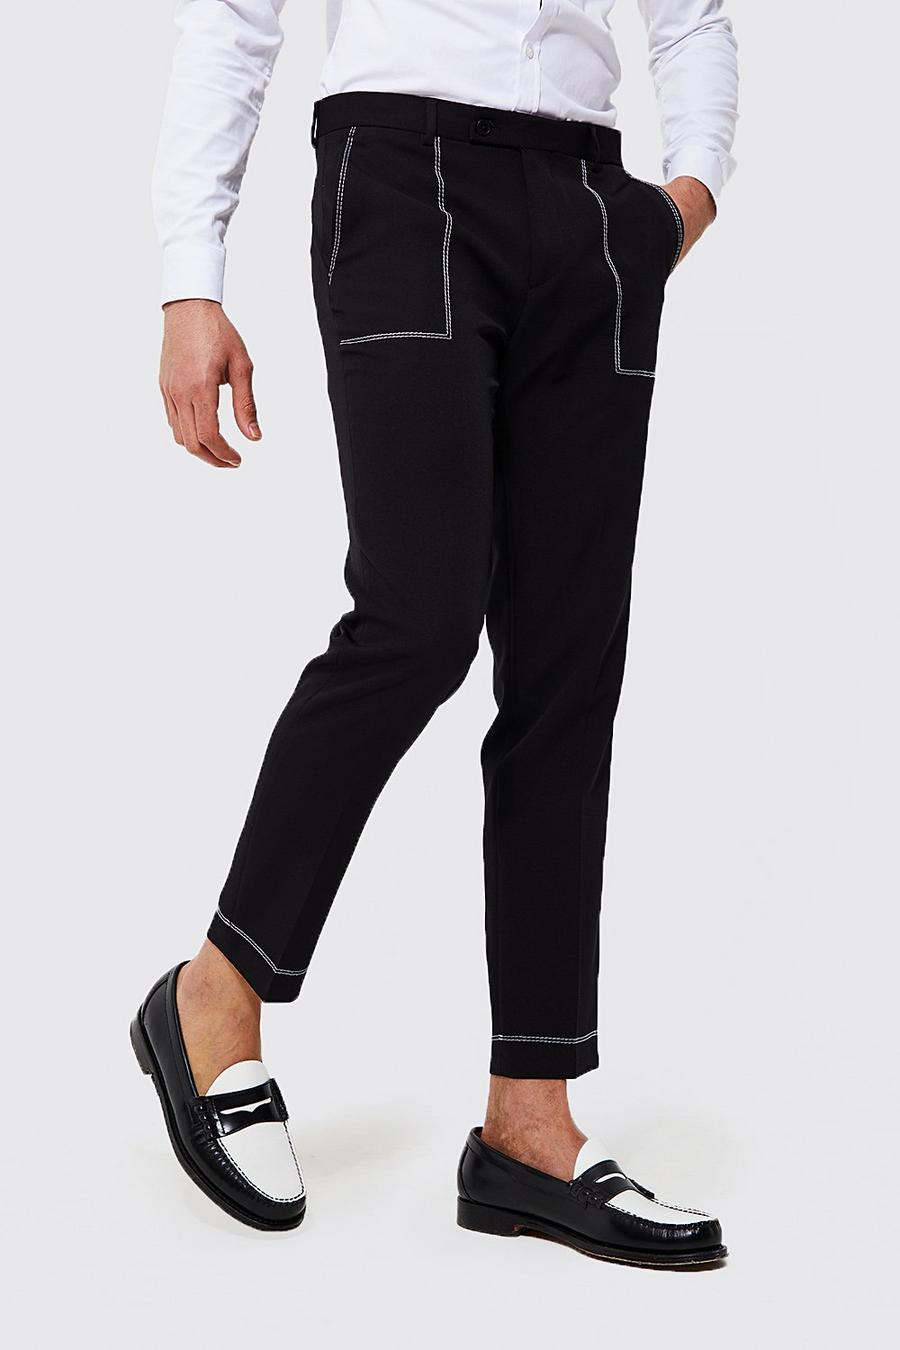 Pantaloni completo Slim Fit con cuciture a contrasto, Black negro image number 1